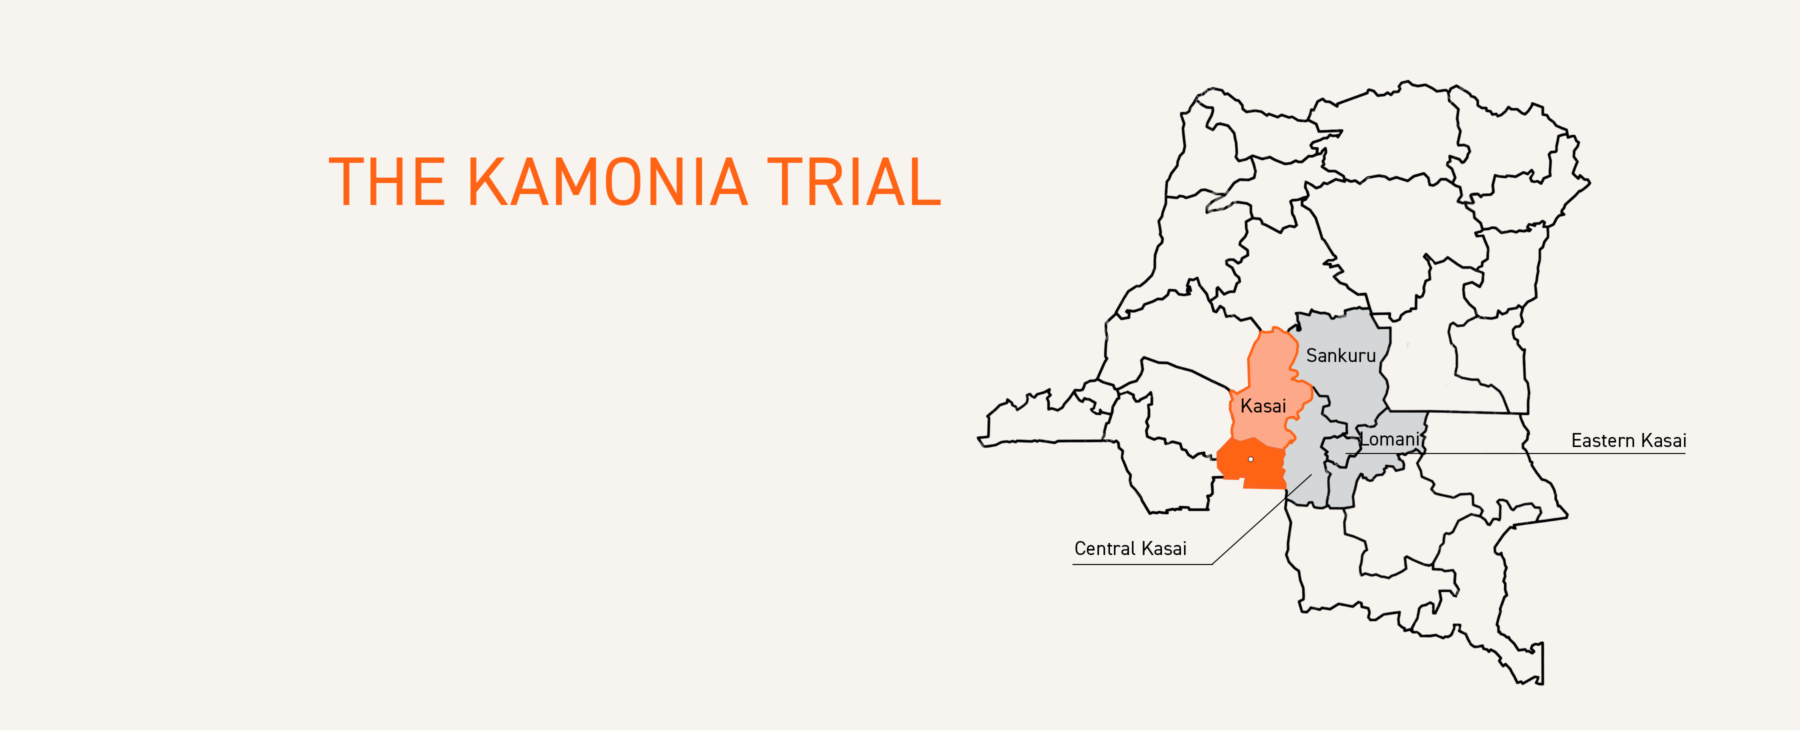 Kamonia trial, map of DRC